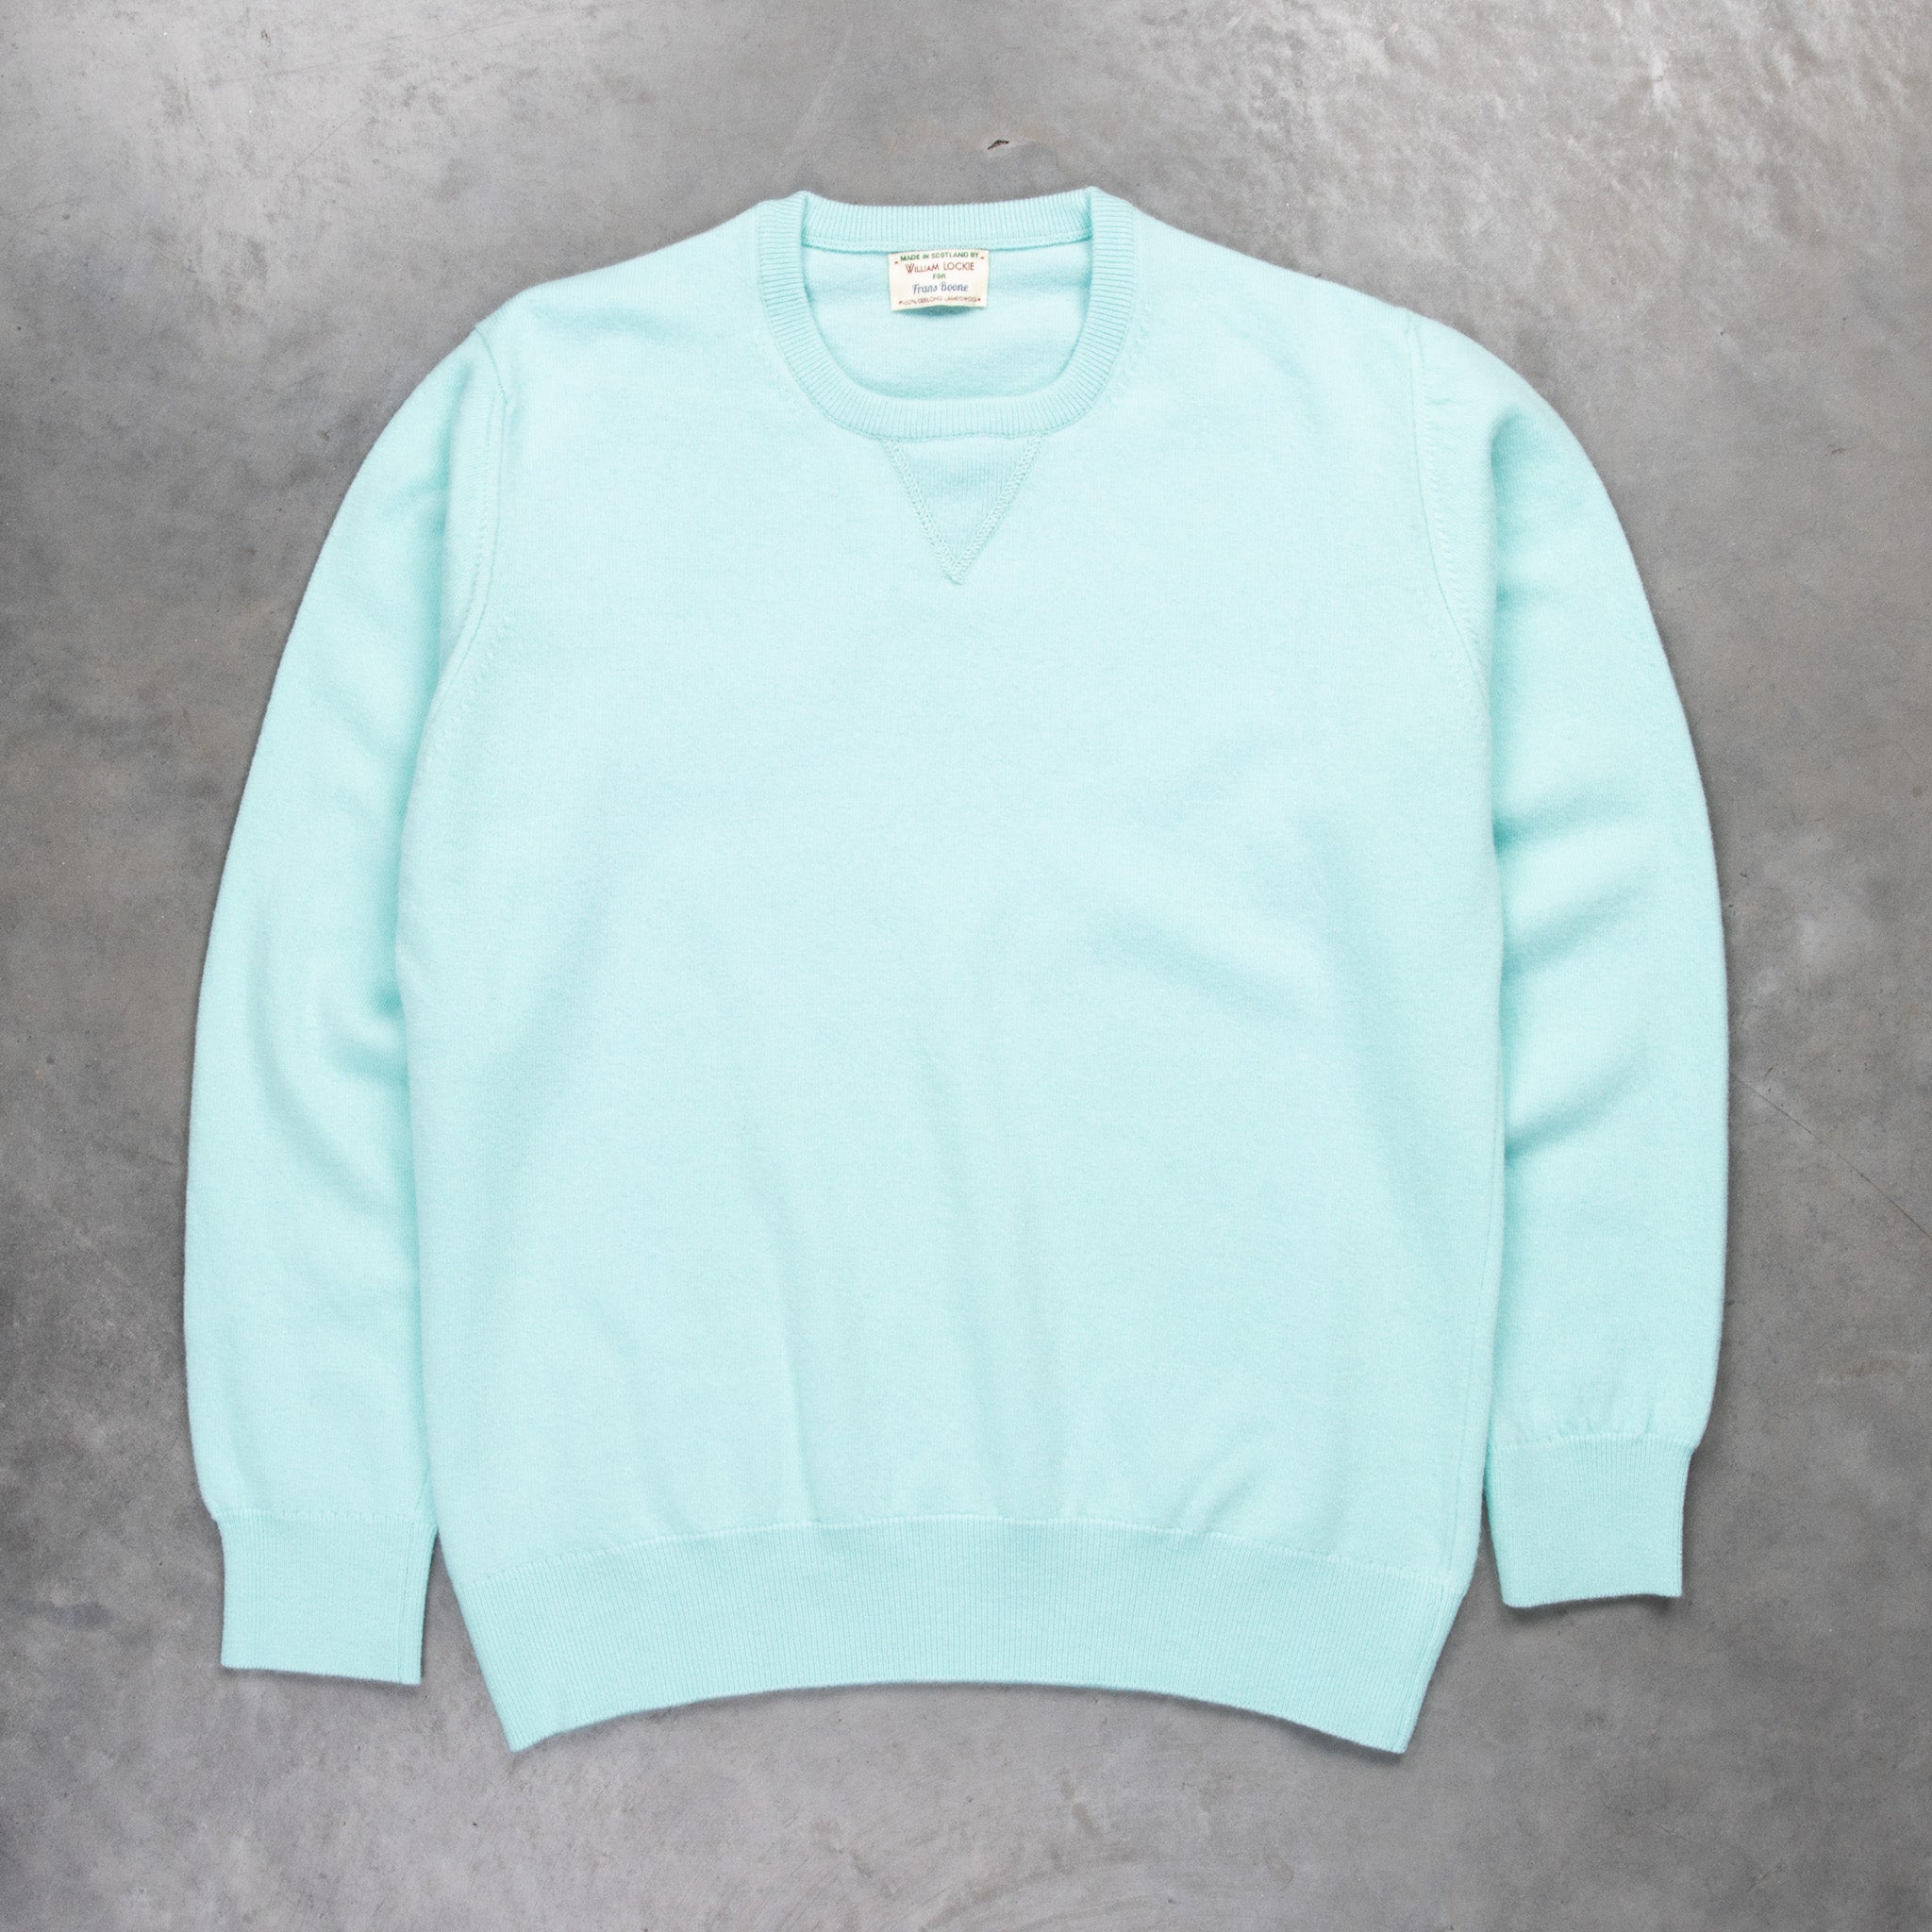 William Lockie x Frans Boone Super Geelong Vintage fit sweater Cambridge